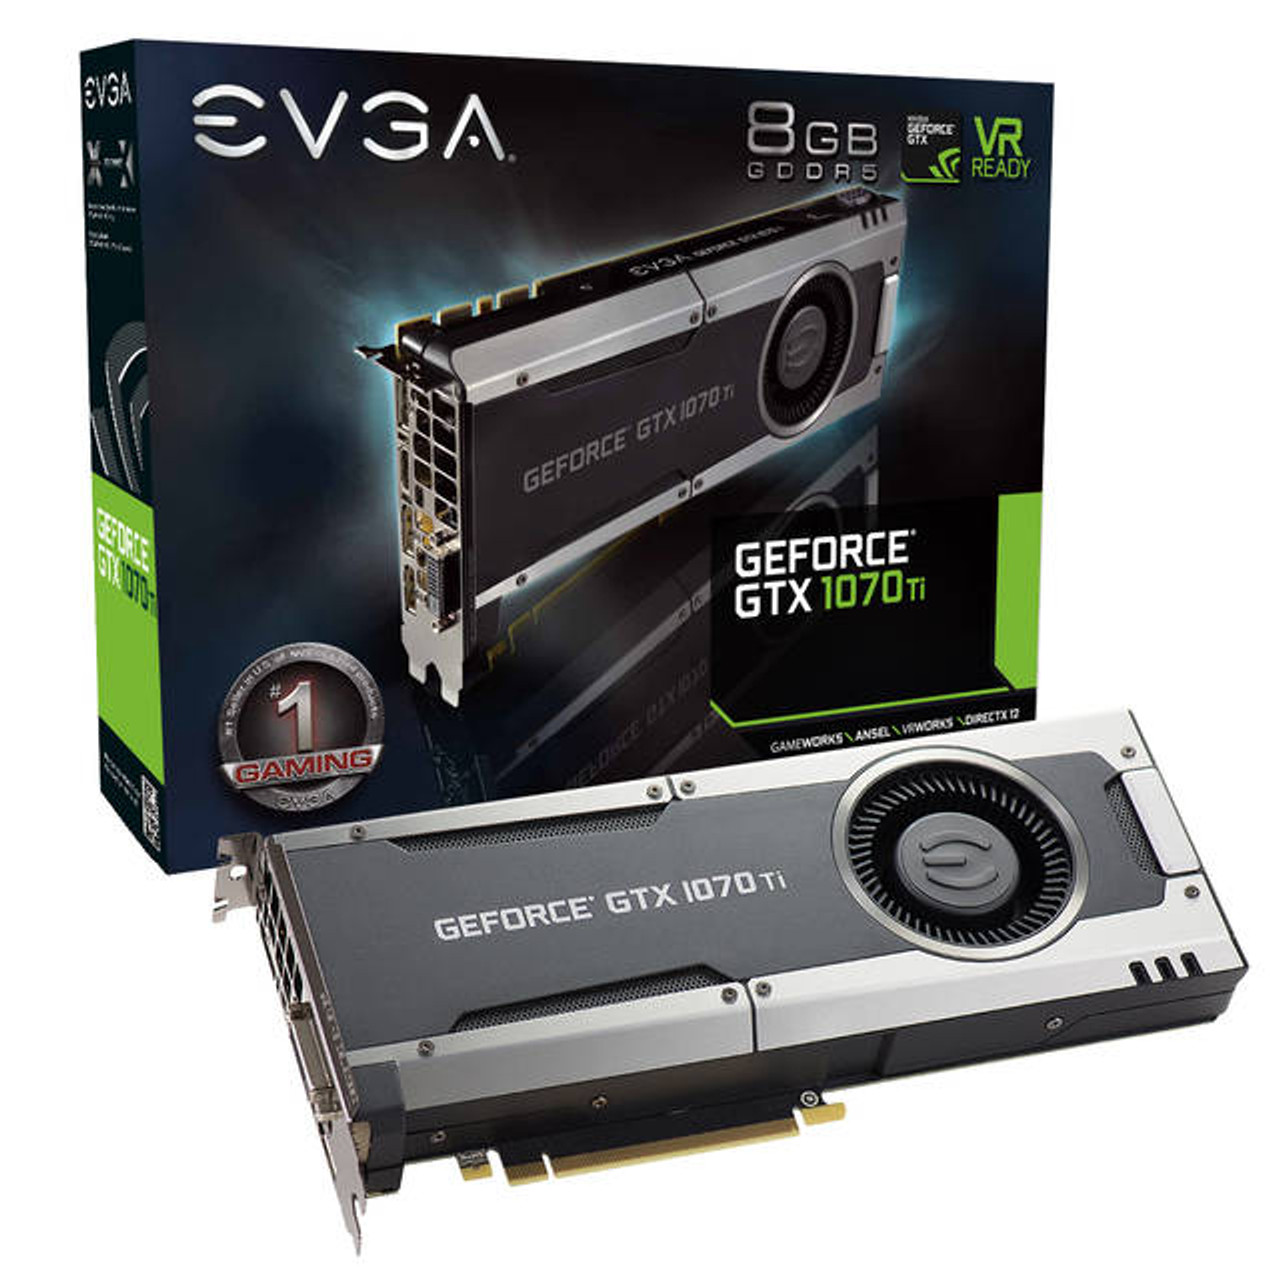 EVGA NVIDIA GeForce GTX 1070 Ti GAMING 8GB GDDR5 DVI/HDMI/3DisplayPort PCI-Express Video Card